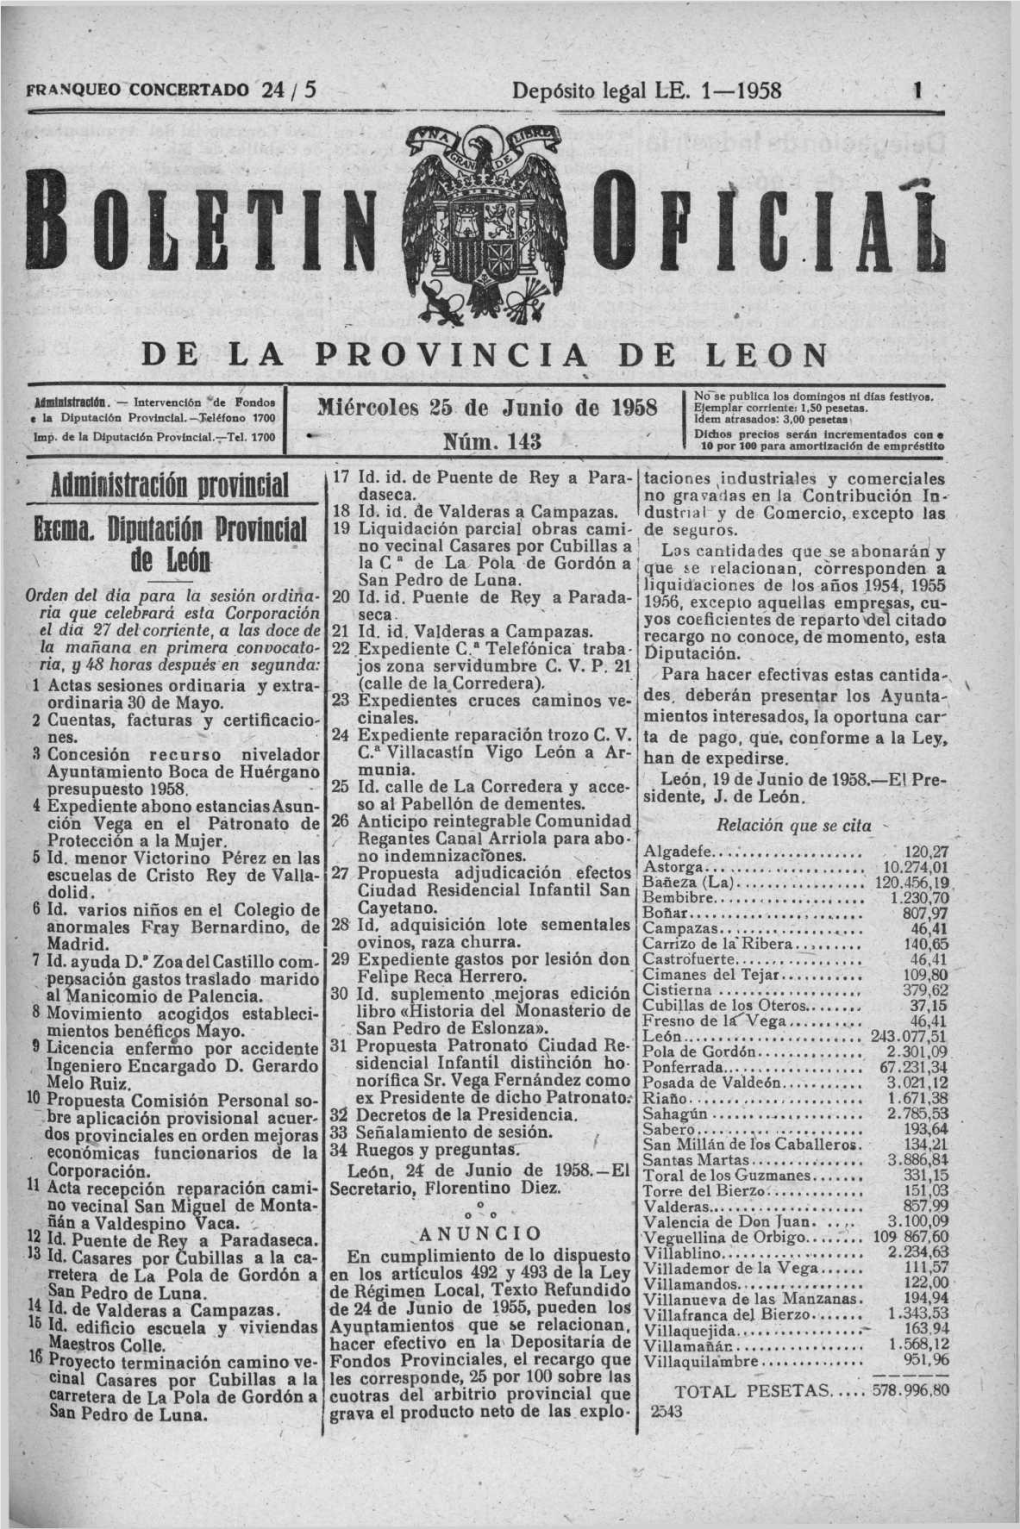 Oficial & De La Provincia De Leon